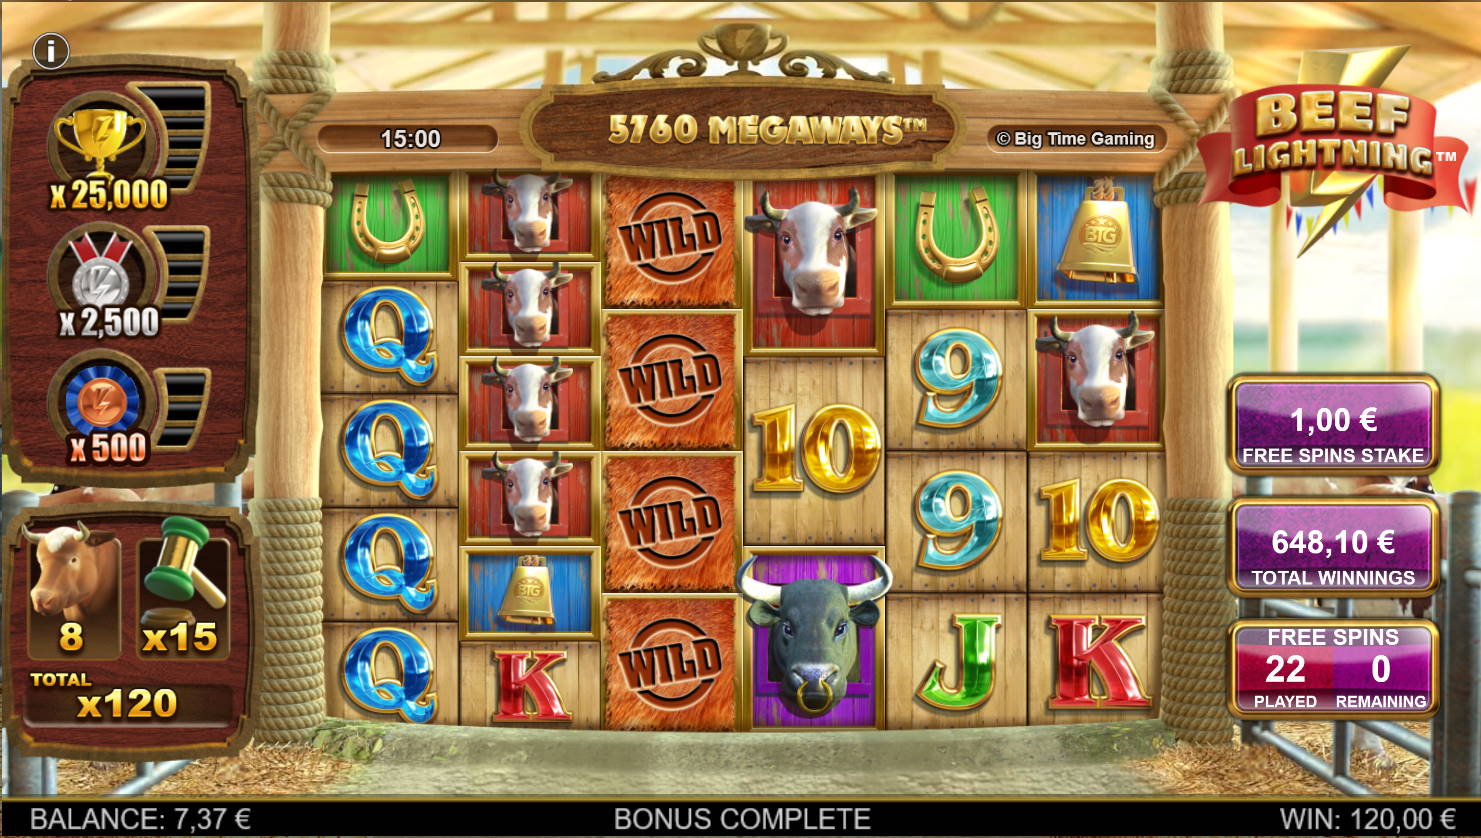 Beef Lightning Casino win picture by Kari Grandi 14.6.2022 648.10e 648X